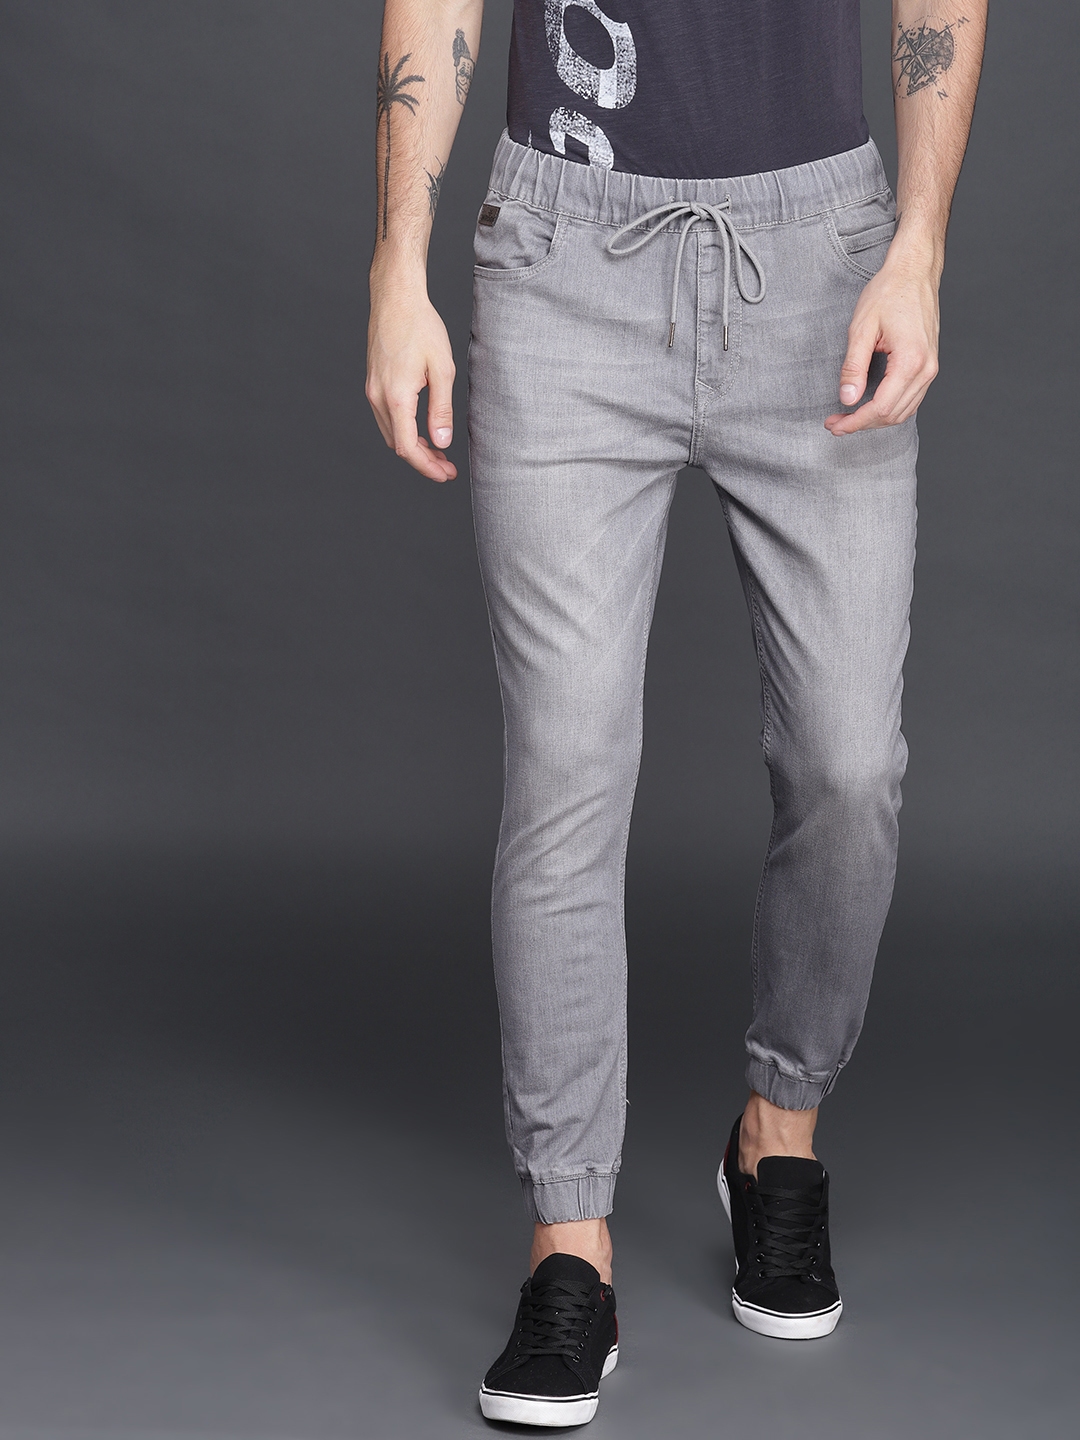 Buy Grey Track Pants for Men by Styli Online  Ajiocom